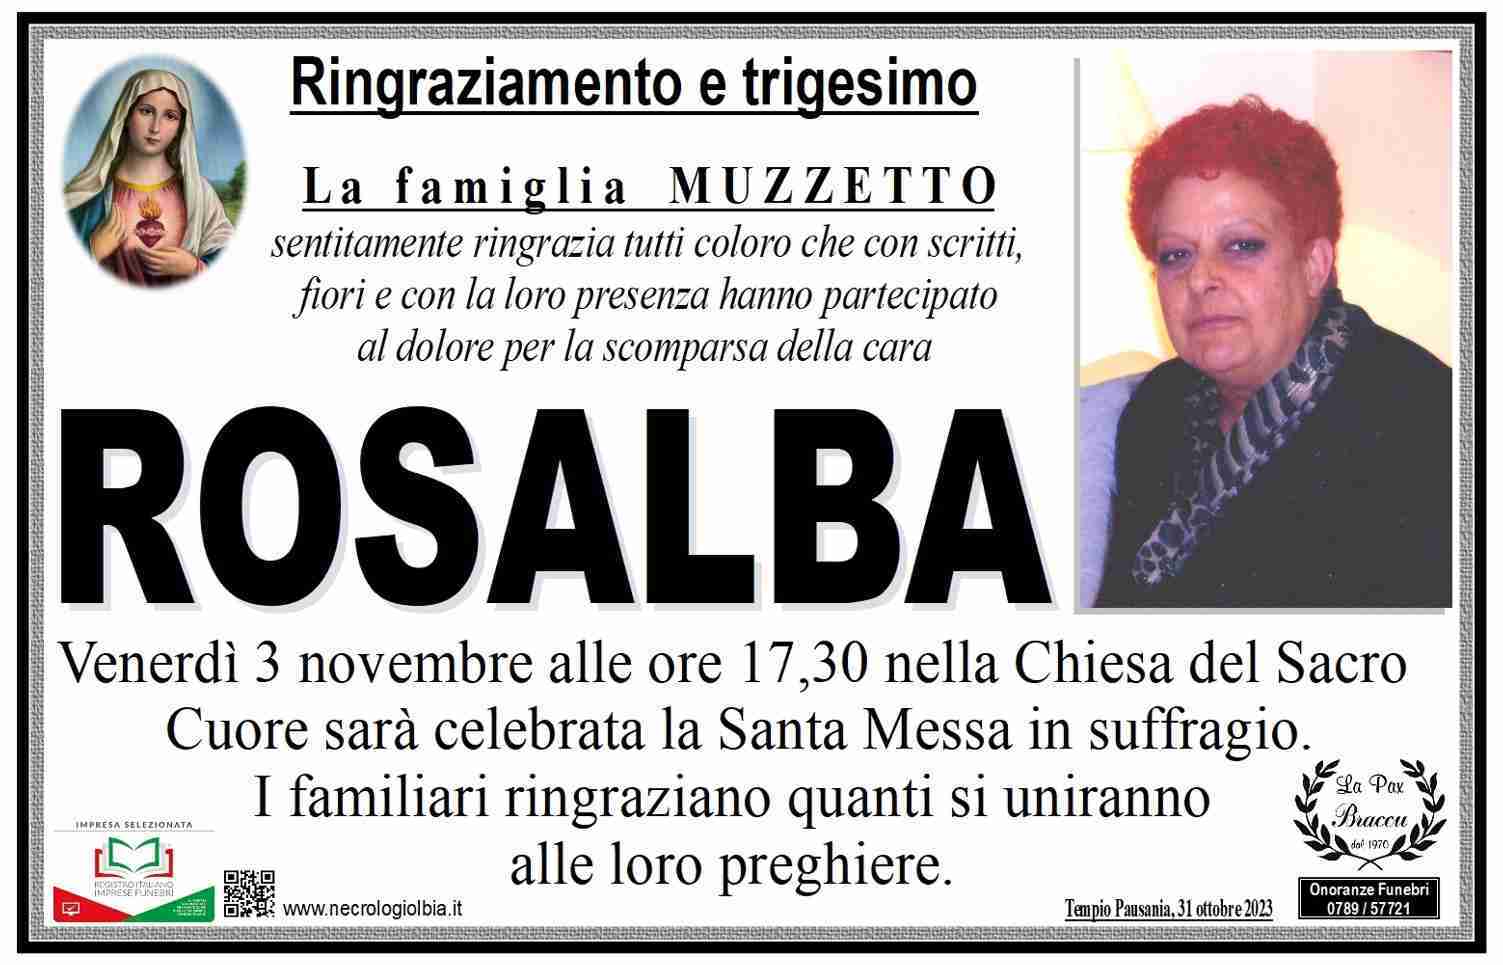 Rosalba Muzzetto